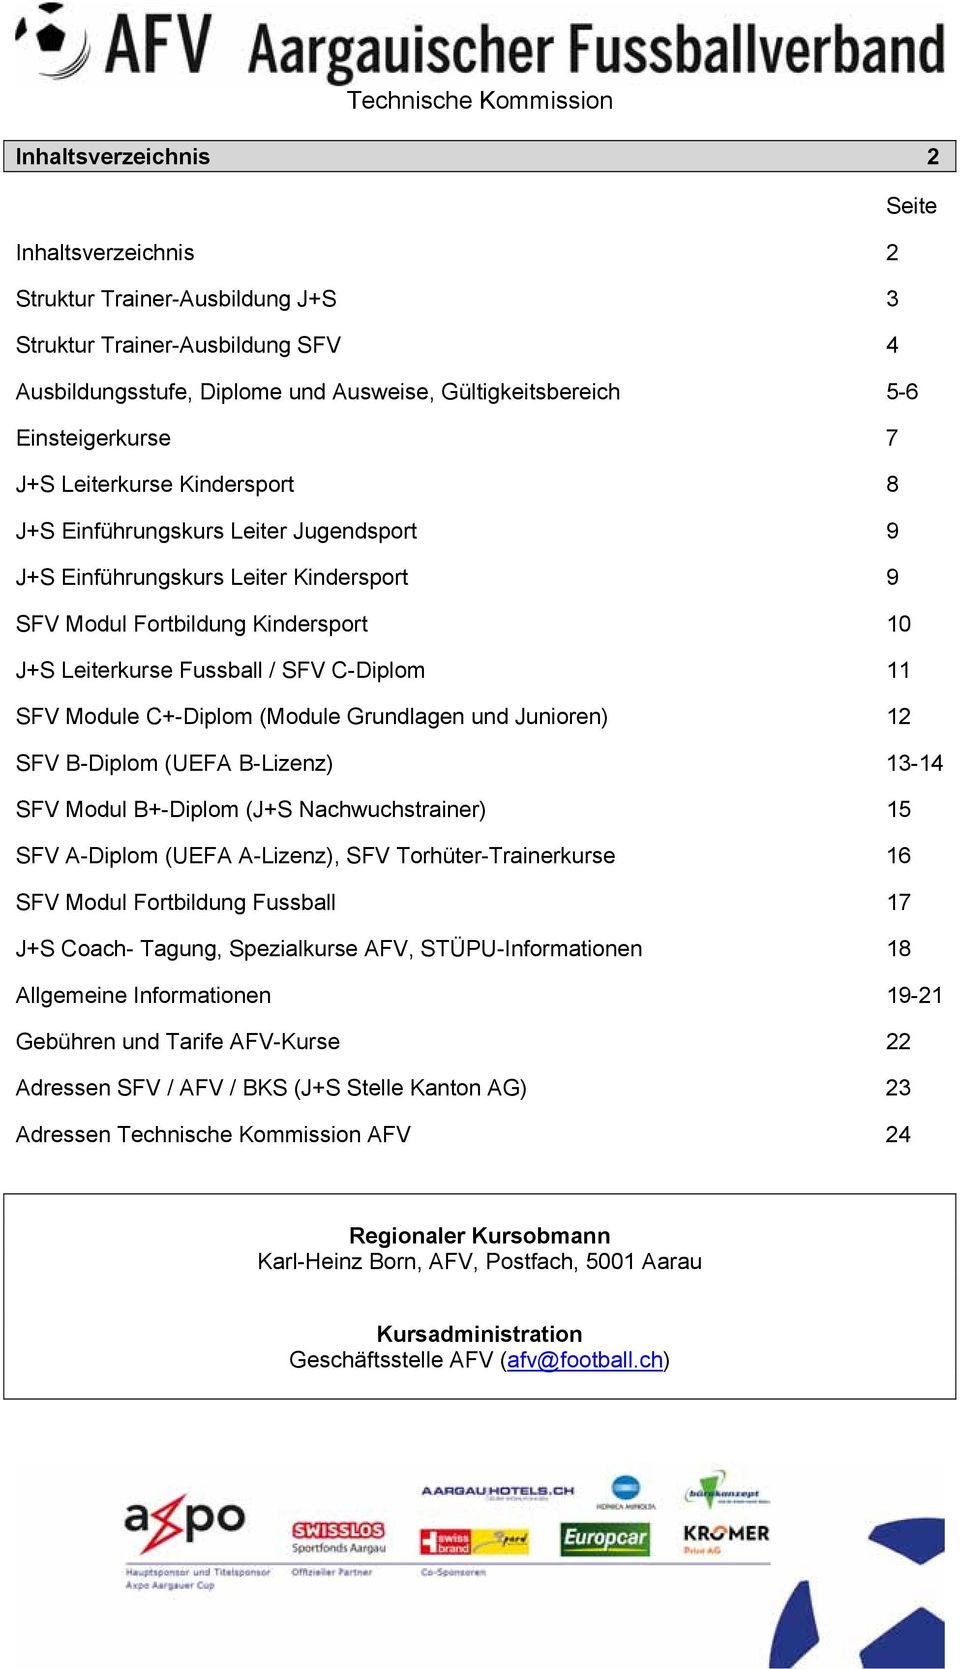 Module C+-Diplom (Module Grundlagen und Junioren) 12 SFV B-Diplom (UEFA B-Lizenz) 13-14 SFV Modul B+-Diplom (J+S Nachwuchstrainer) 15 SFV A-Diplom (UEFA A-Lizenz), SFV Torhüter-Trainerkurse 16 SFV